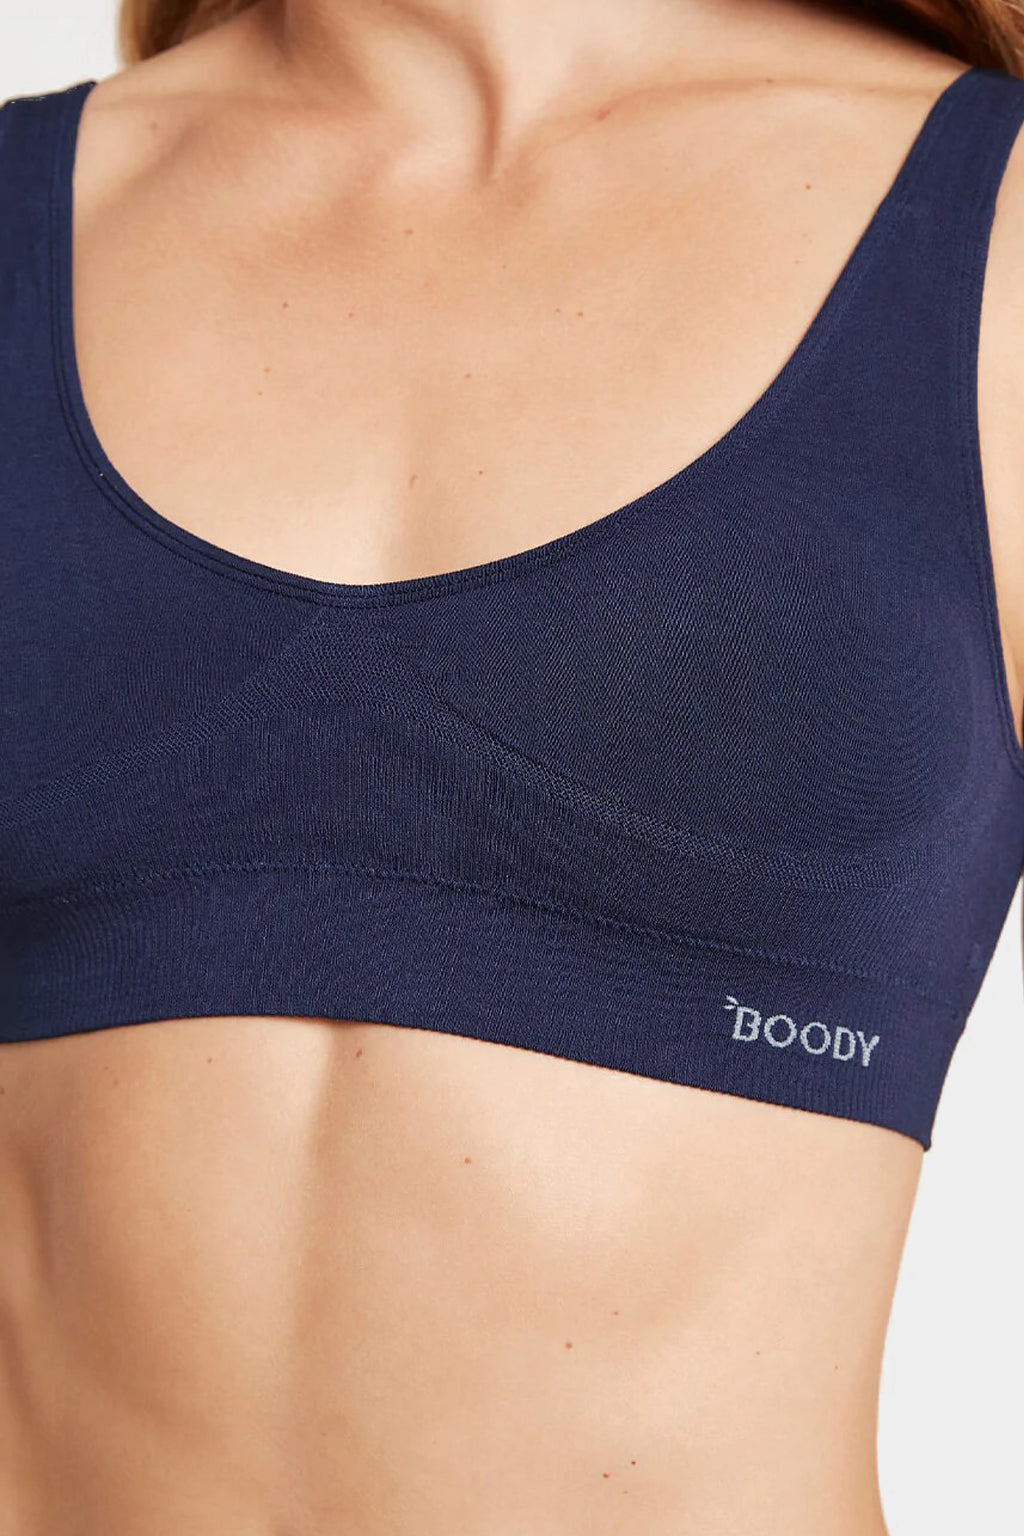 Boody Body EcoWear Women's Padded Shaper Bra, Wireless, Seamless Stretch,  Soft Breathable, Bamboo Viscose